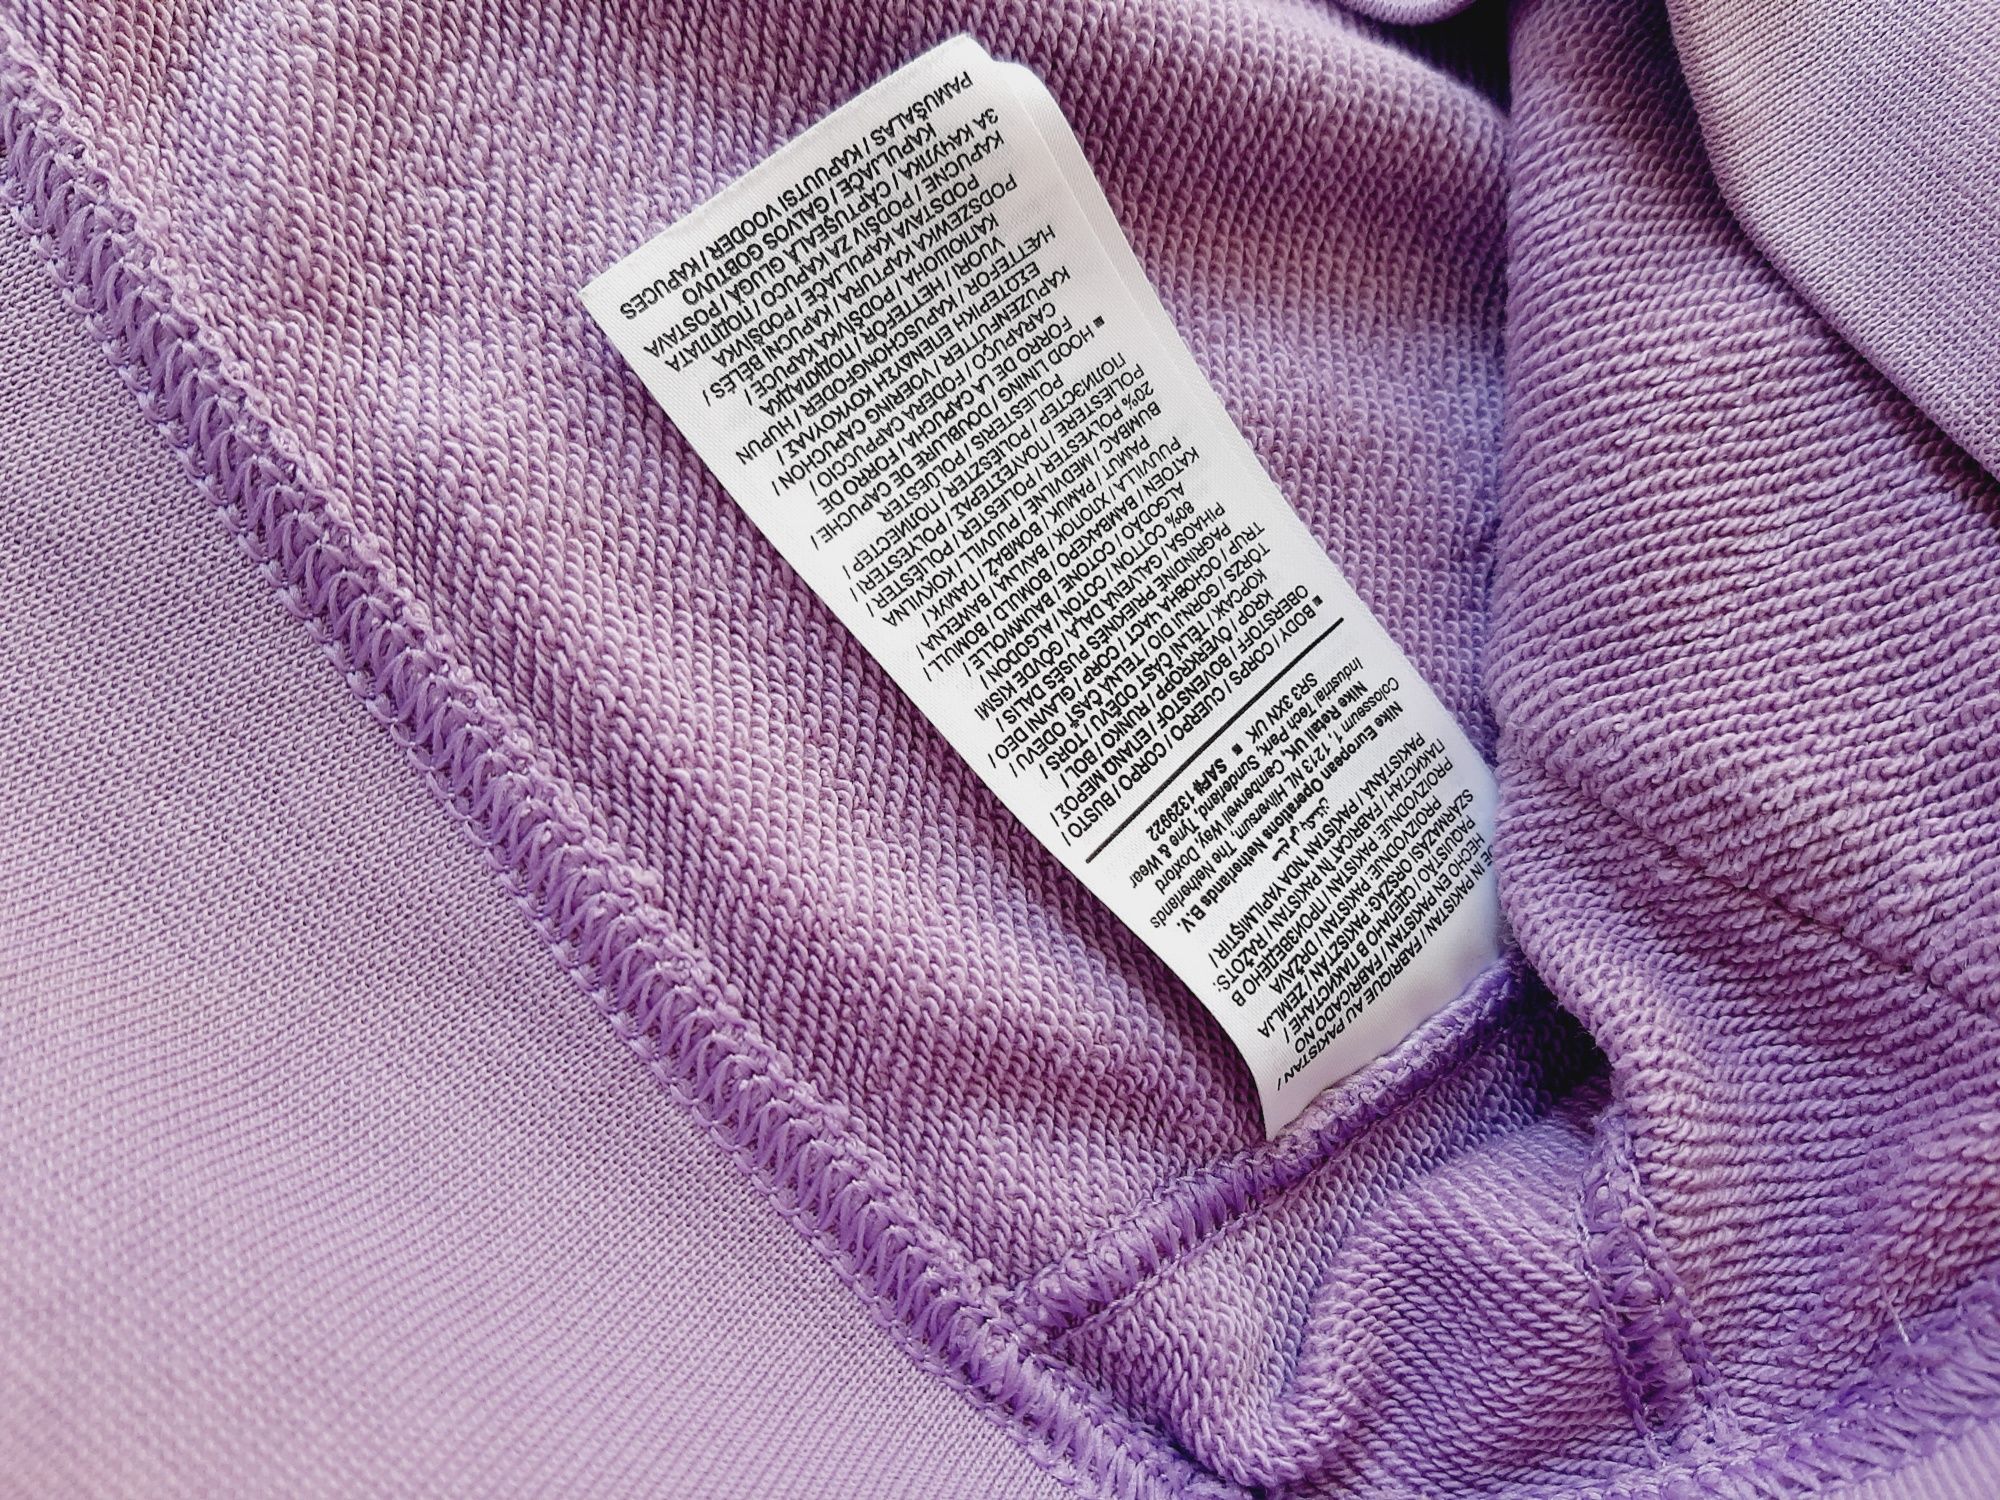 Bluza Nike Air liliowa S promocja dzis